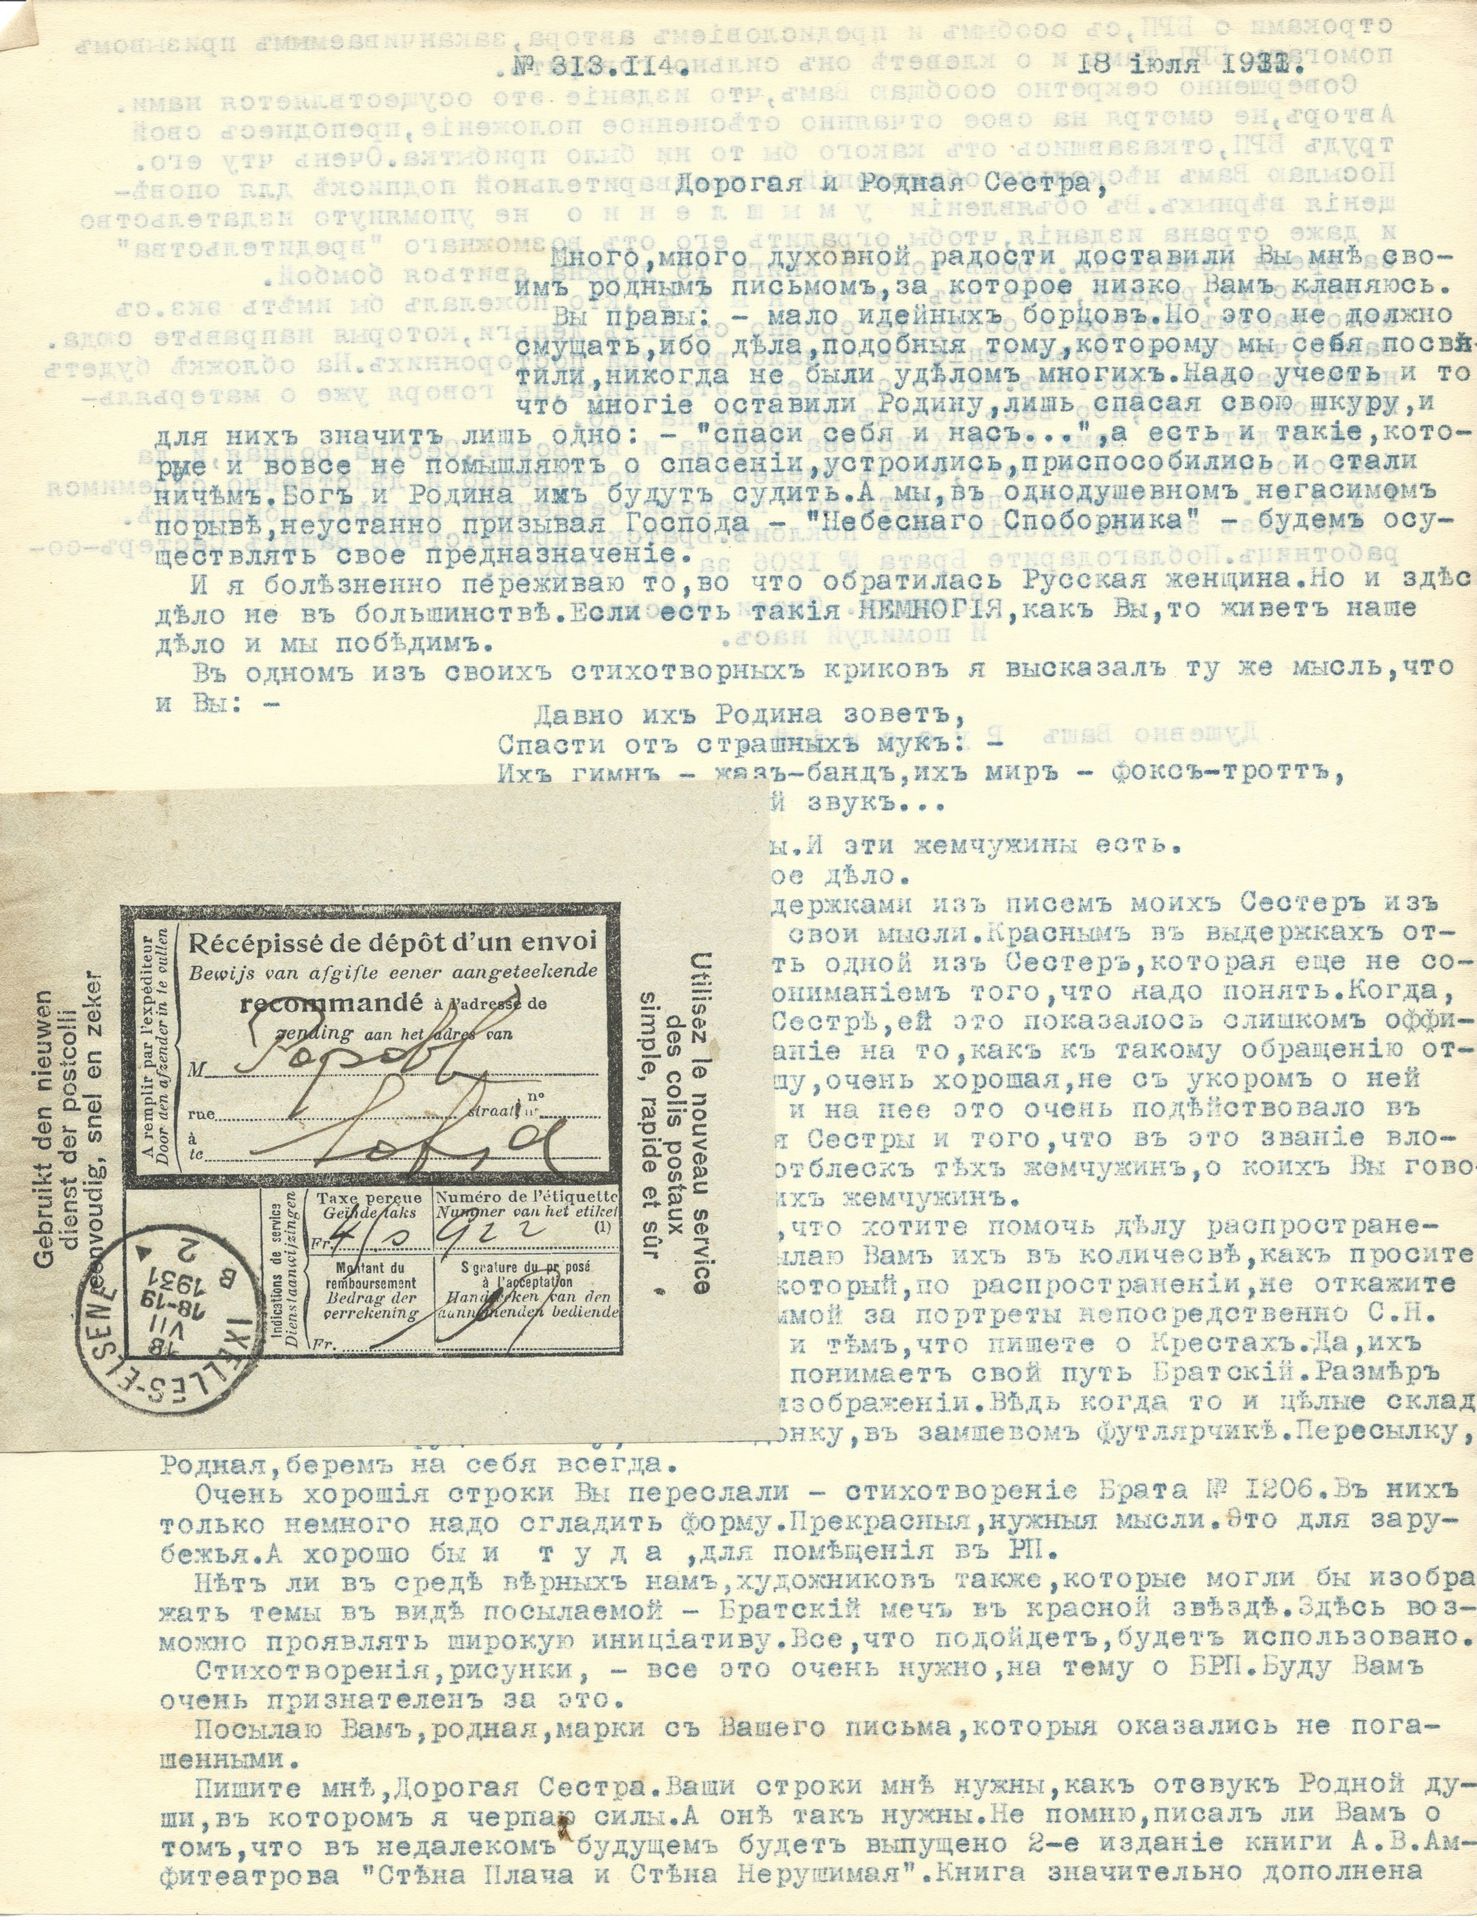 Null ARCHIVES of Andrei BALASHOV (1899-1969)

LAS to Andrei Balashov, copies of &hellip;